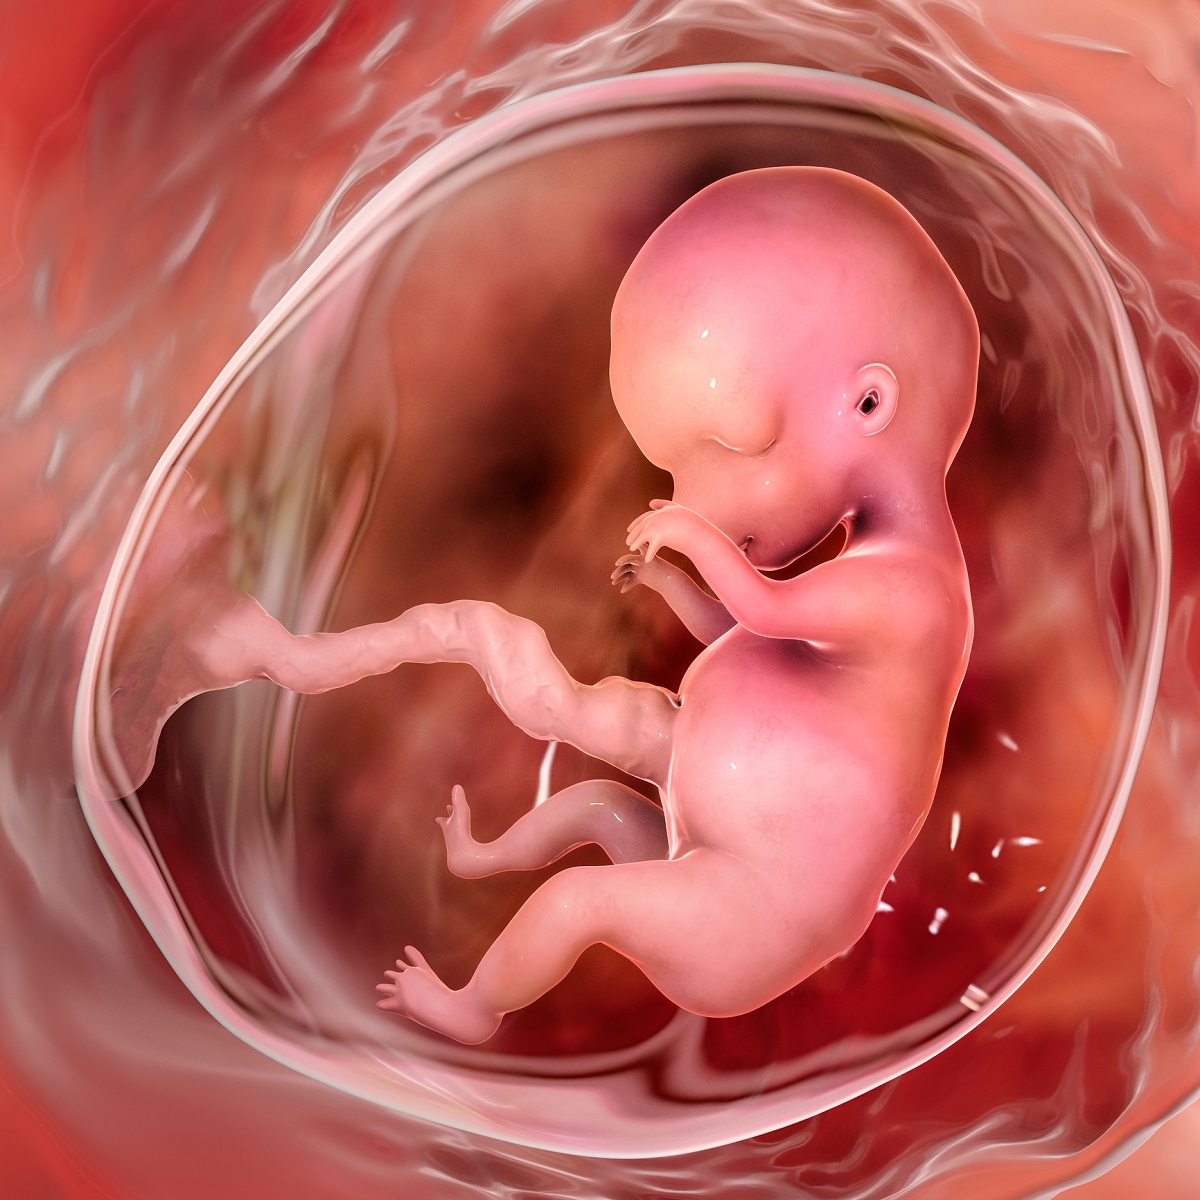 Embryo v 9. týždni tehotenstva. Zdroj: Getty Images